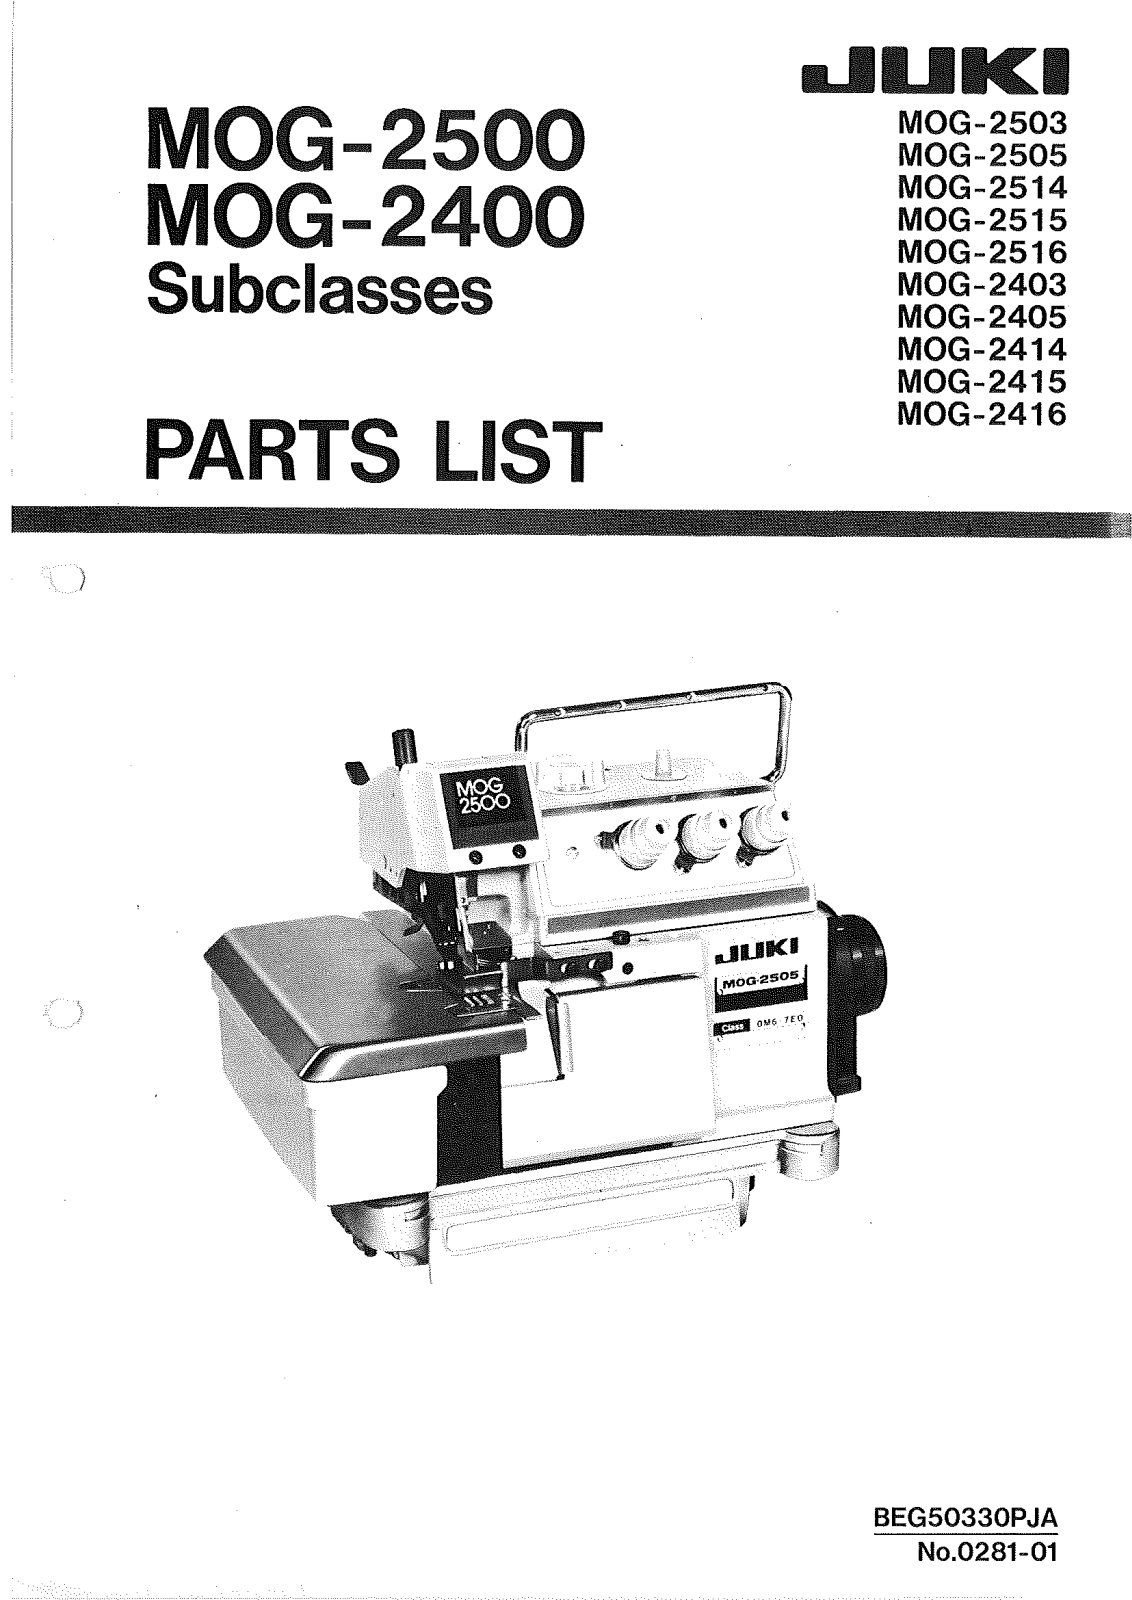 Juki MOG-2403, MOG-2503, MOG-2405, MOG-2414, MOG-2415 Parts List